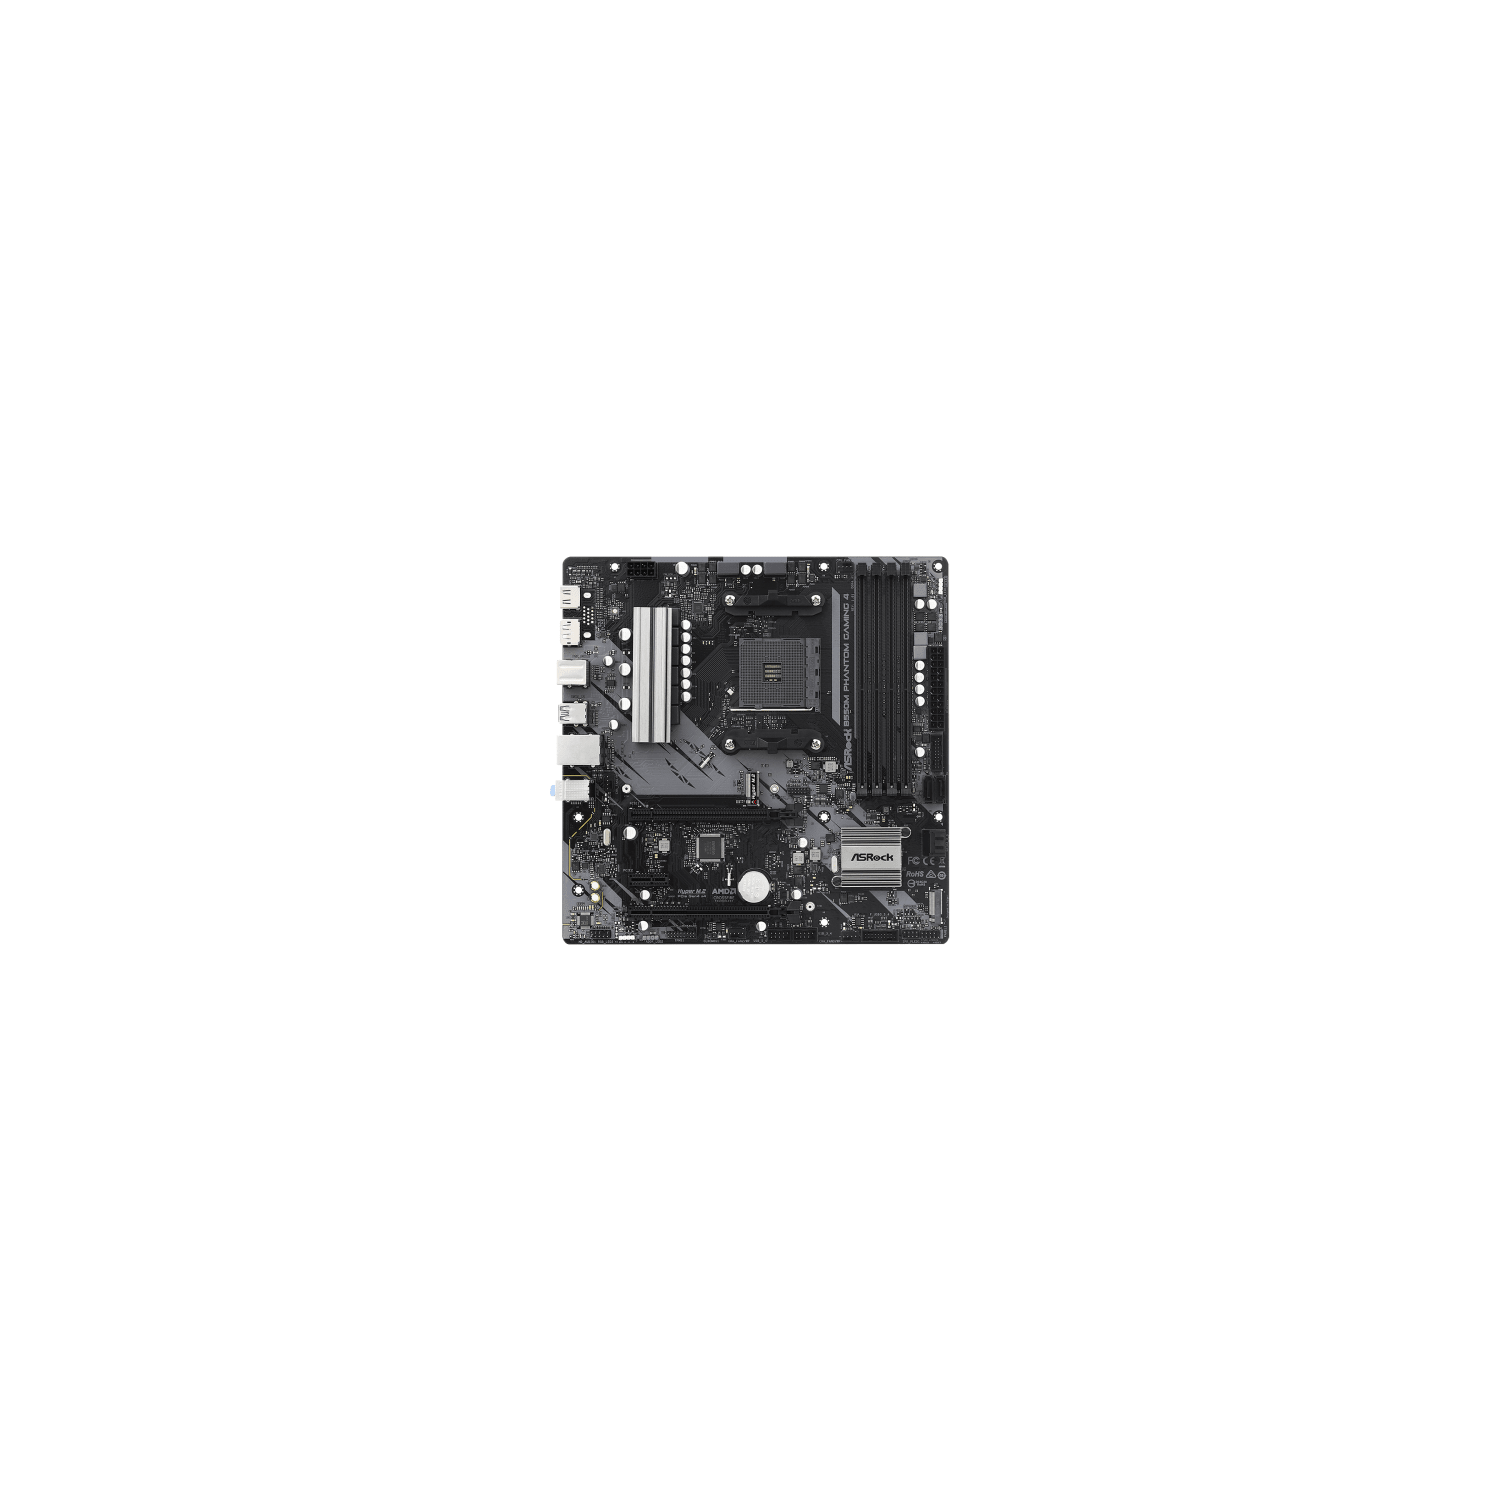 ASRock AMD Ryzen 3000 Socket AM4 SATA 6Gb/s HDMI Black Motherboard (90-MXBE90-A0UAYZ)